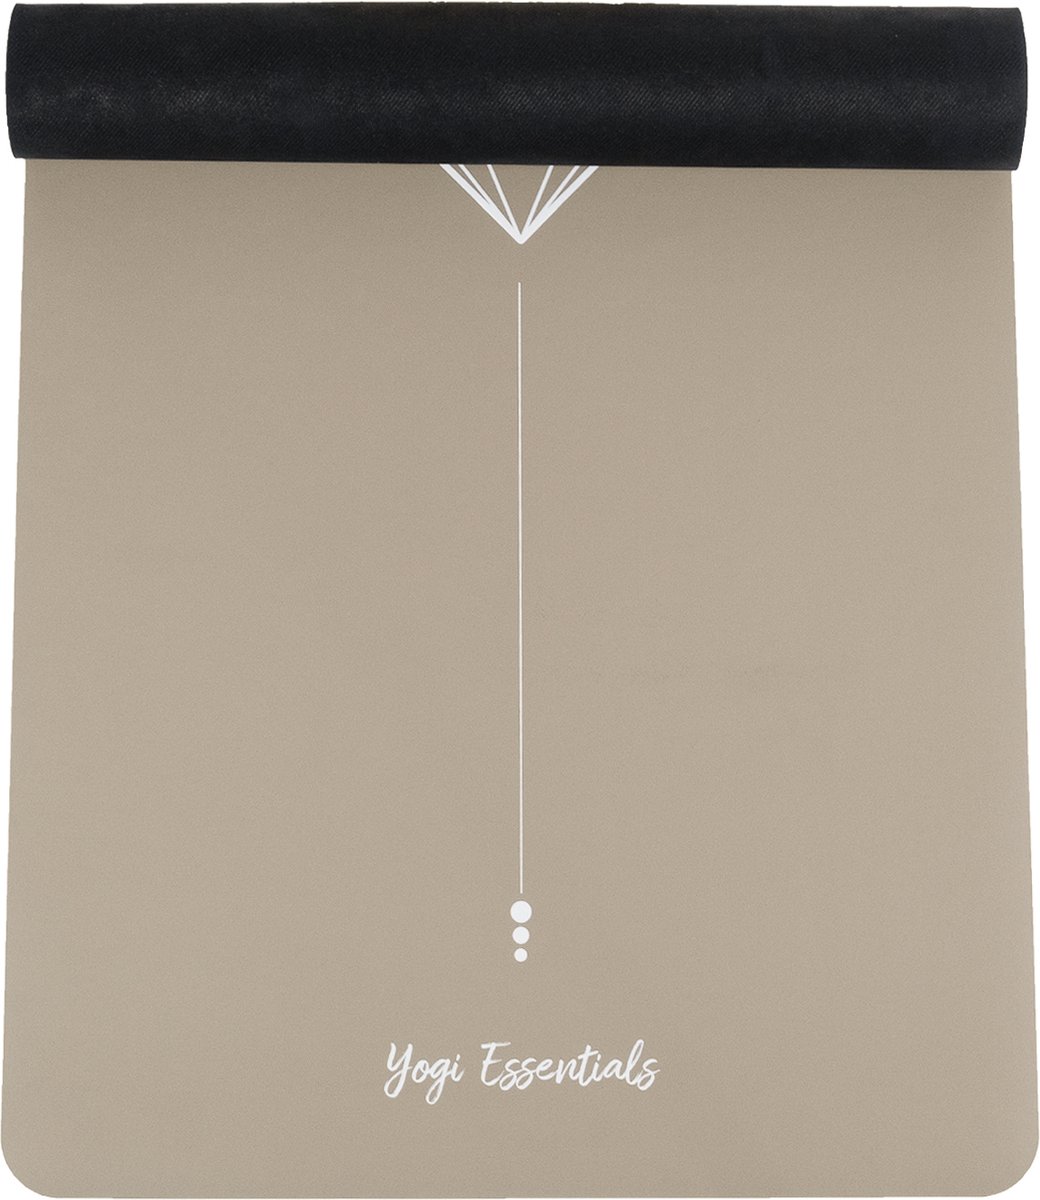 Yogi Essentials - Pu Natuurlijk rubber Yogamat Milk tea - Pro Grip - INCL. GRATIS YOGAMAT TAS - 185 cm x 68 cm x 4mm